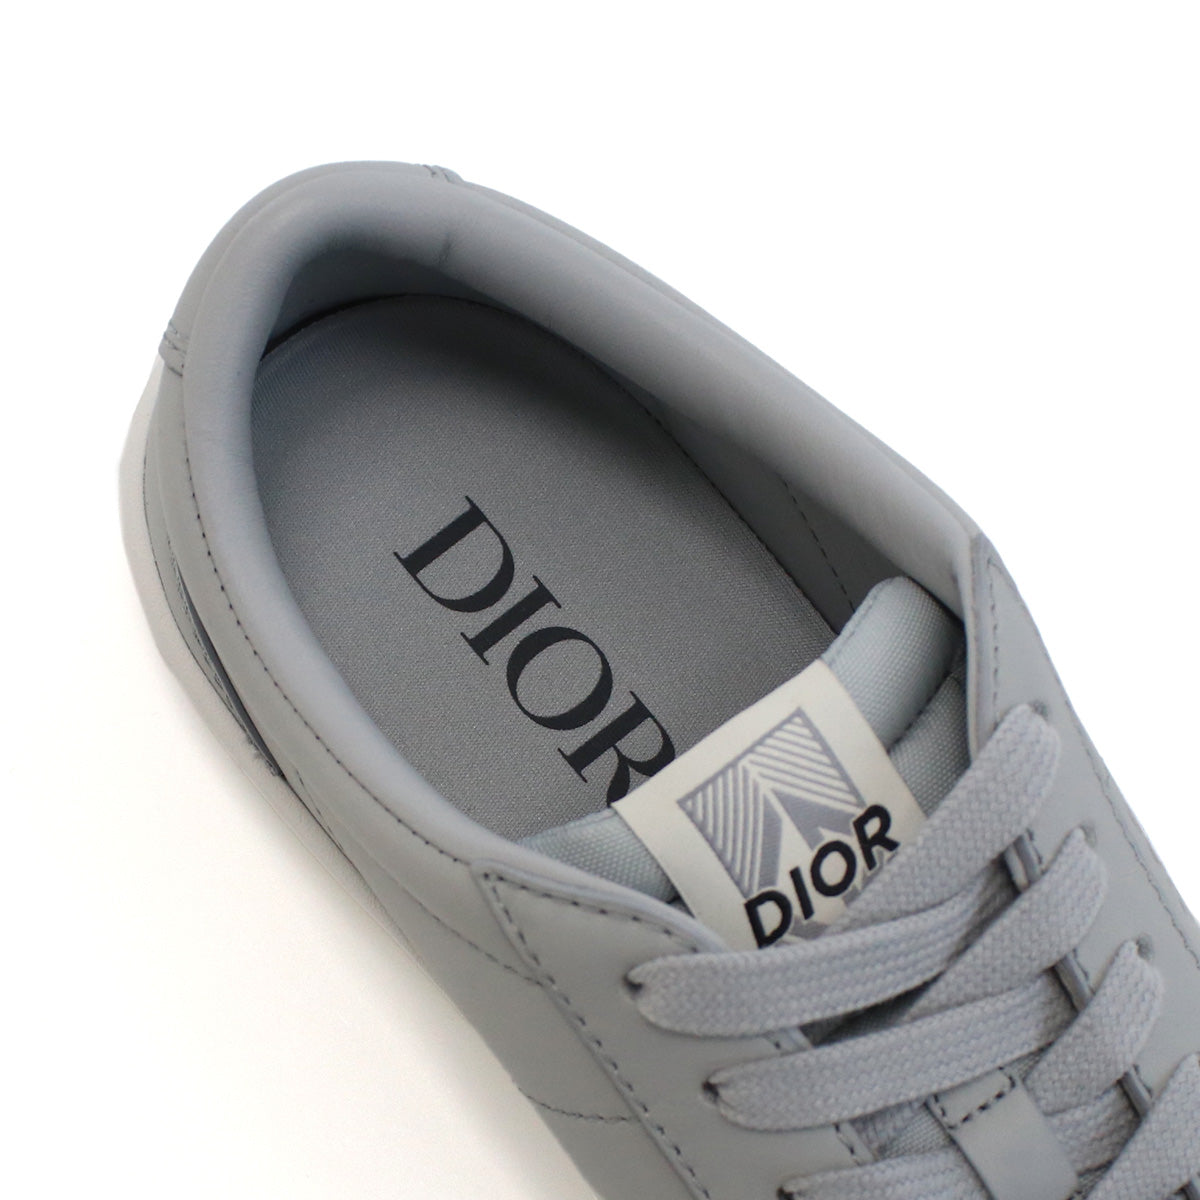 Dior ディオール 3SN285 スニーカー グレー系 メンズ